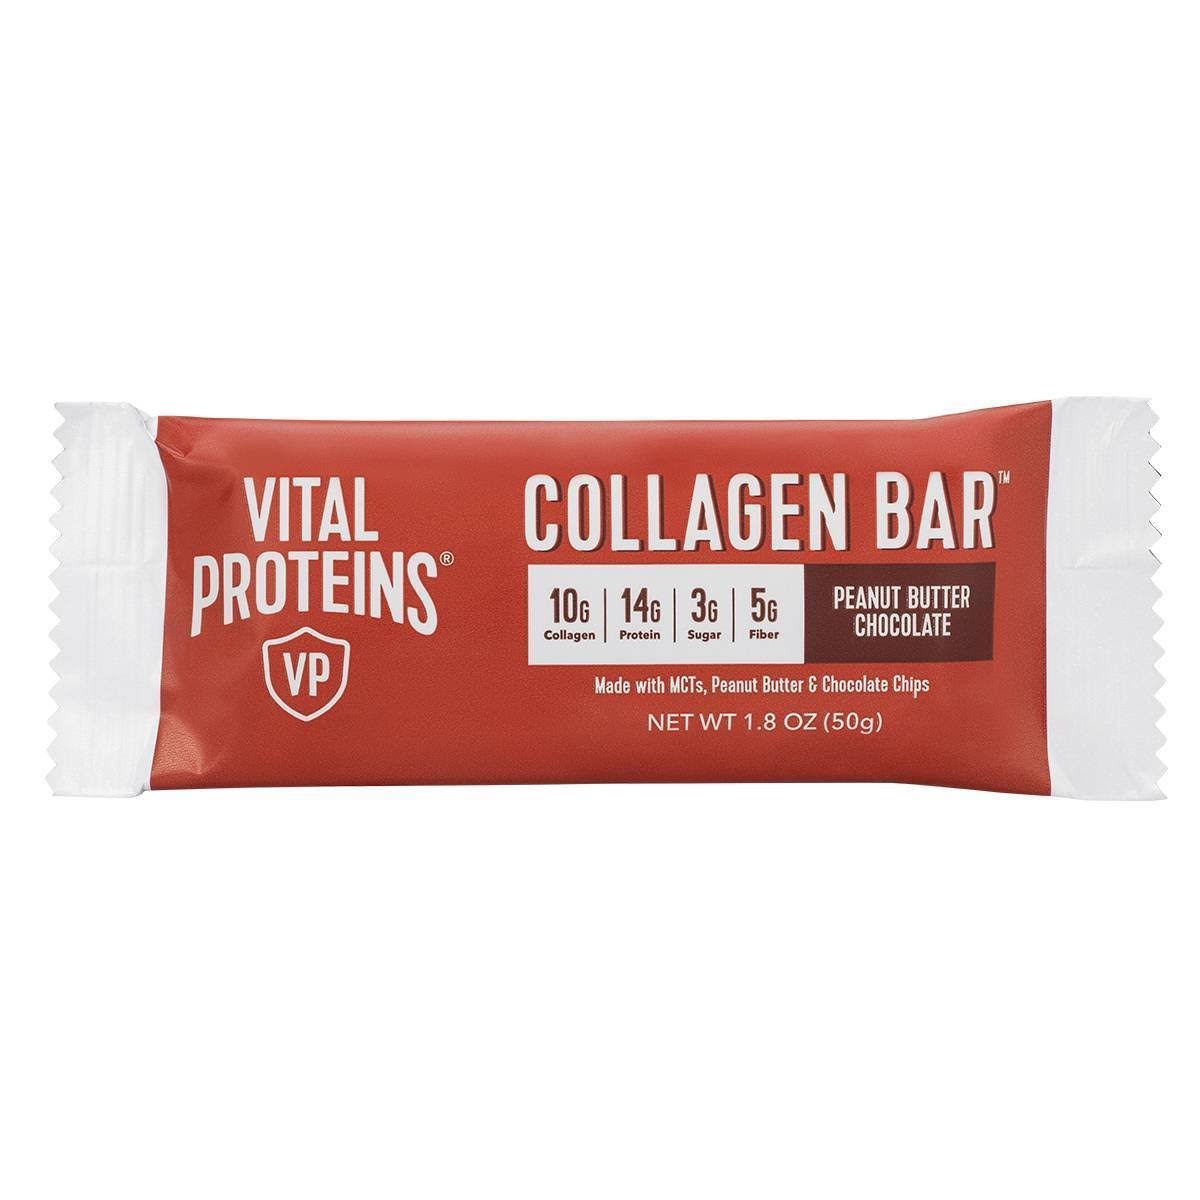 Vital Proteins Collagen Bar Peanut Butter Chocolate 2.1 oz.